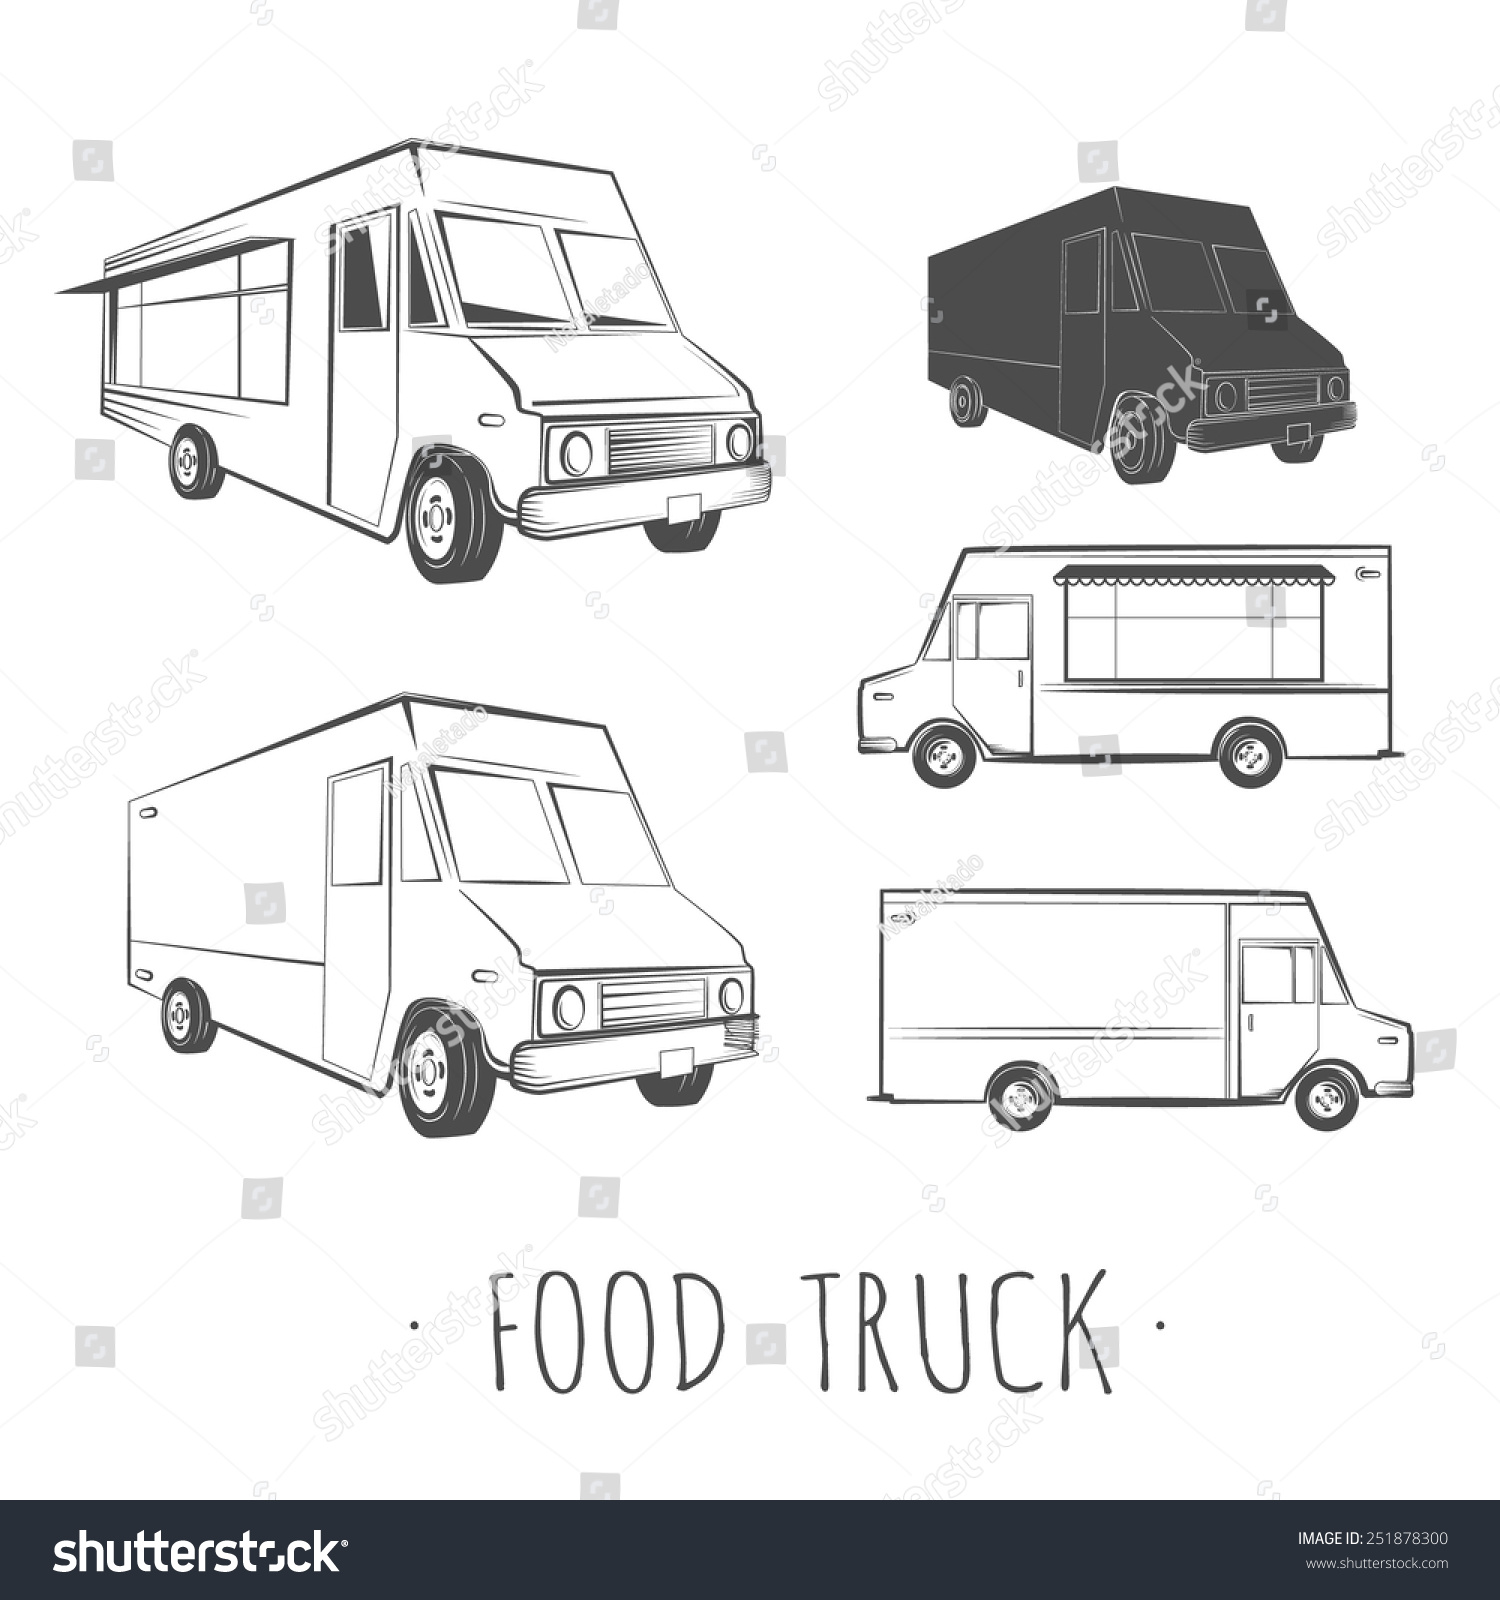 Food Truck Blank Stock Vector Illustration 251878300 Shutterstock